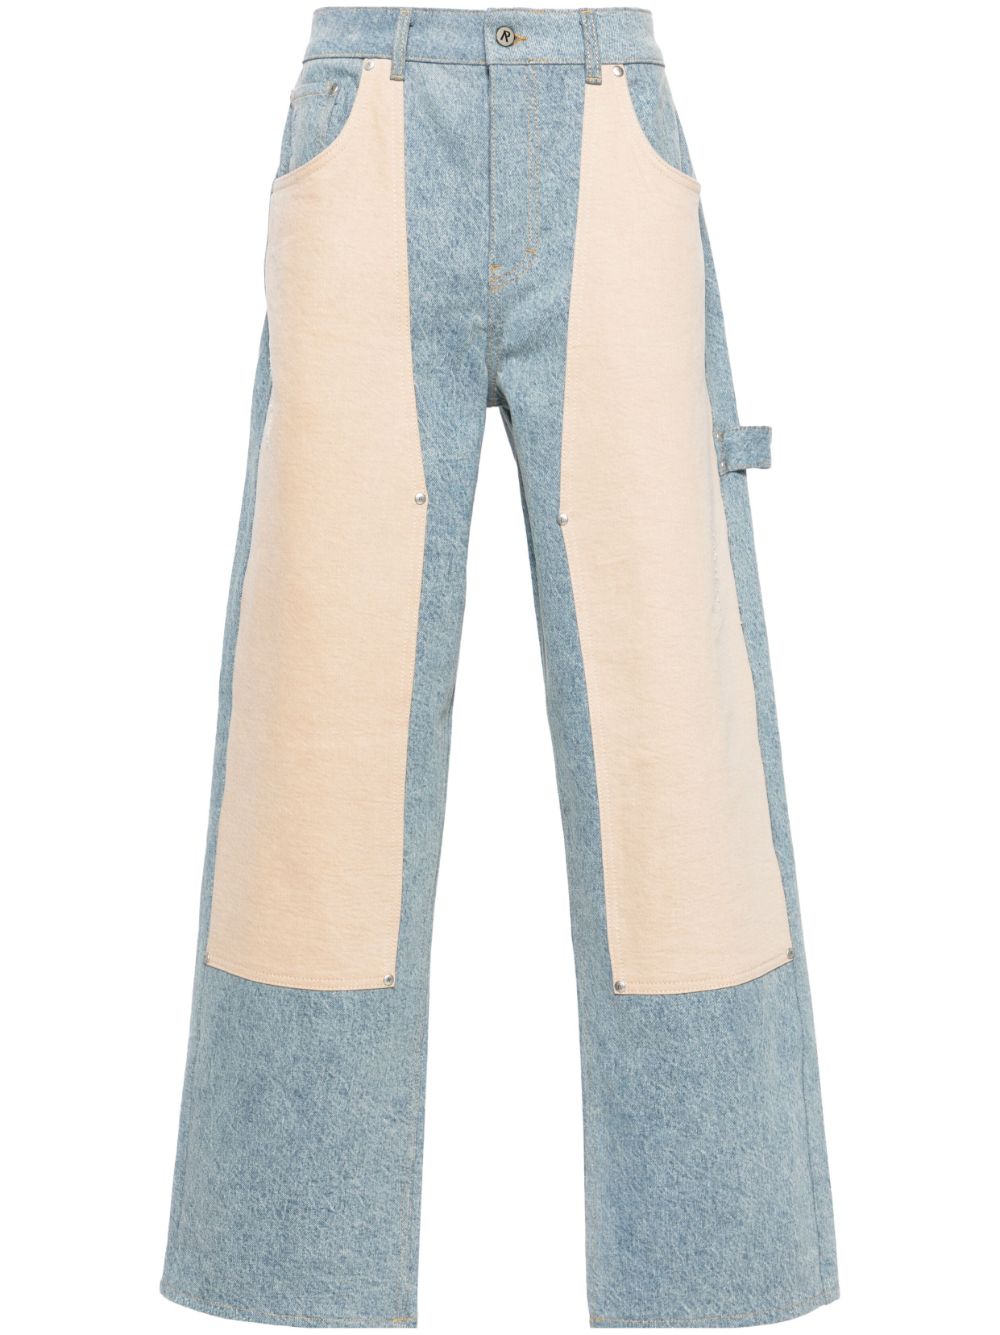 R3C-V2 jeans with color-block design